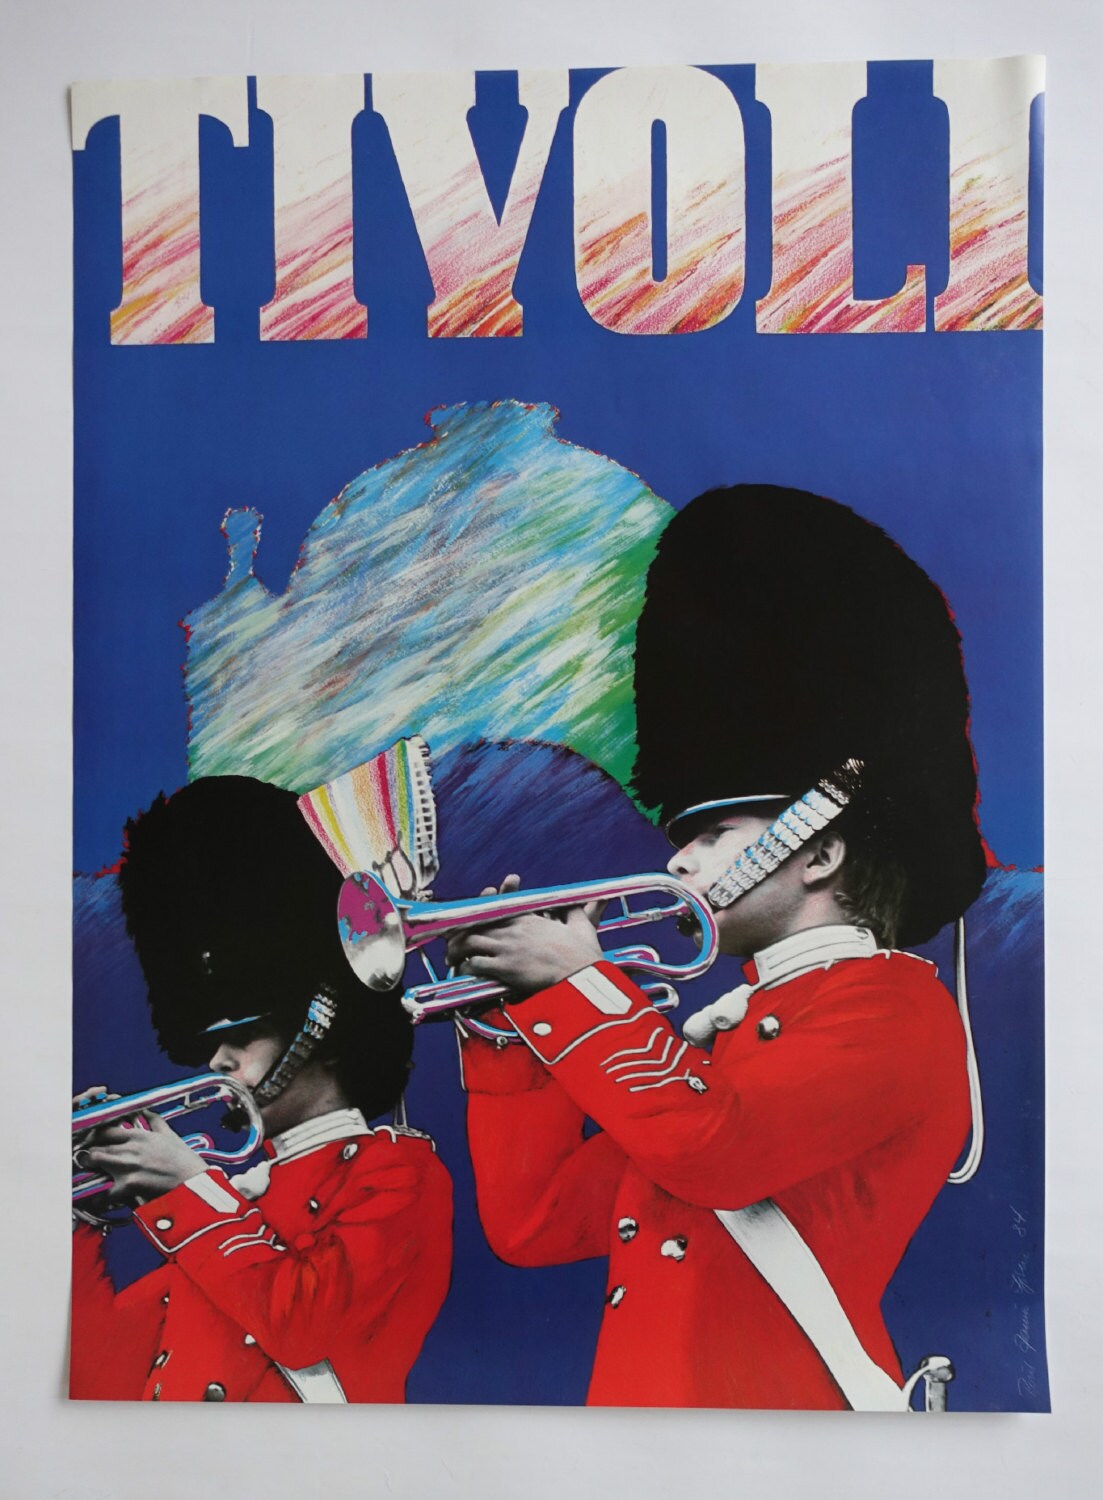 1984 Tivoli Gardens by Poul Janus Ipsen - Original Vintage poster